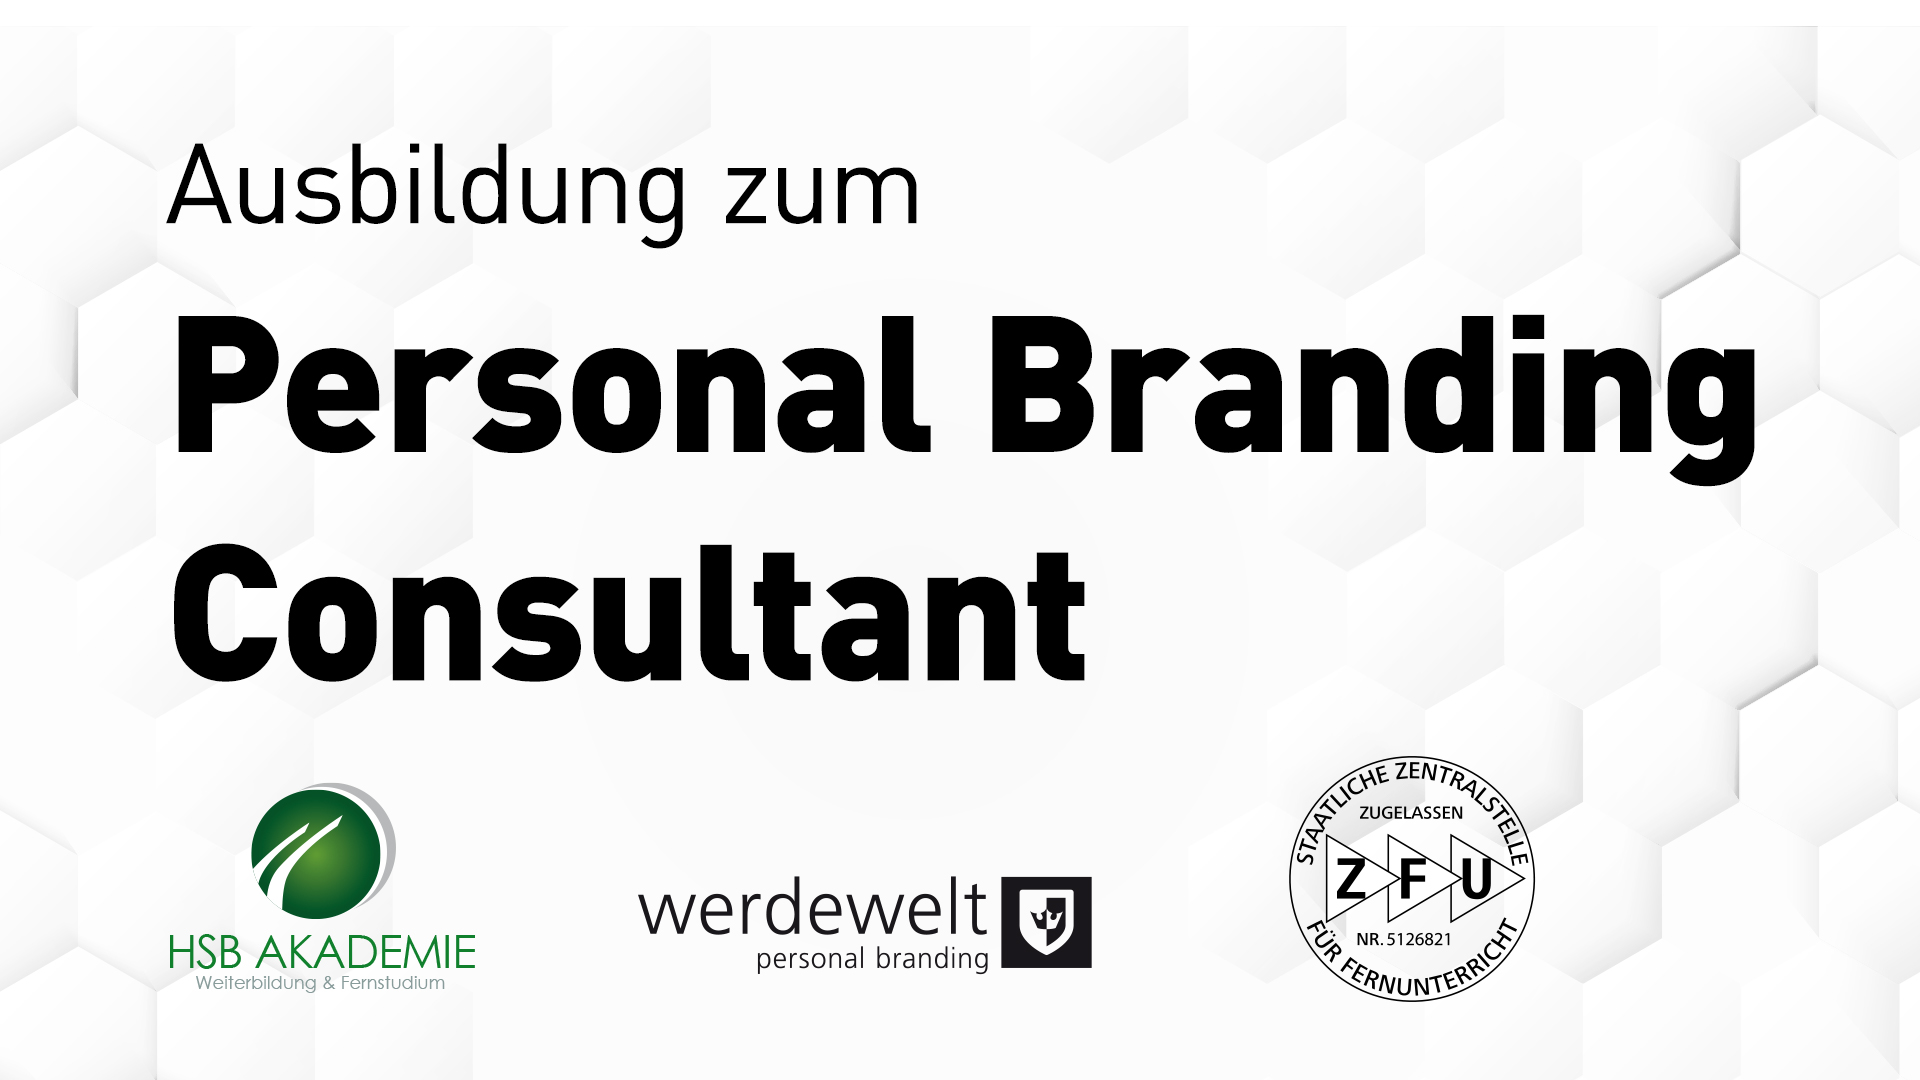 jetzt-zfu-zertifiziert-ausbildung-zum-personal-branding-consultant